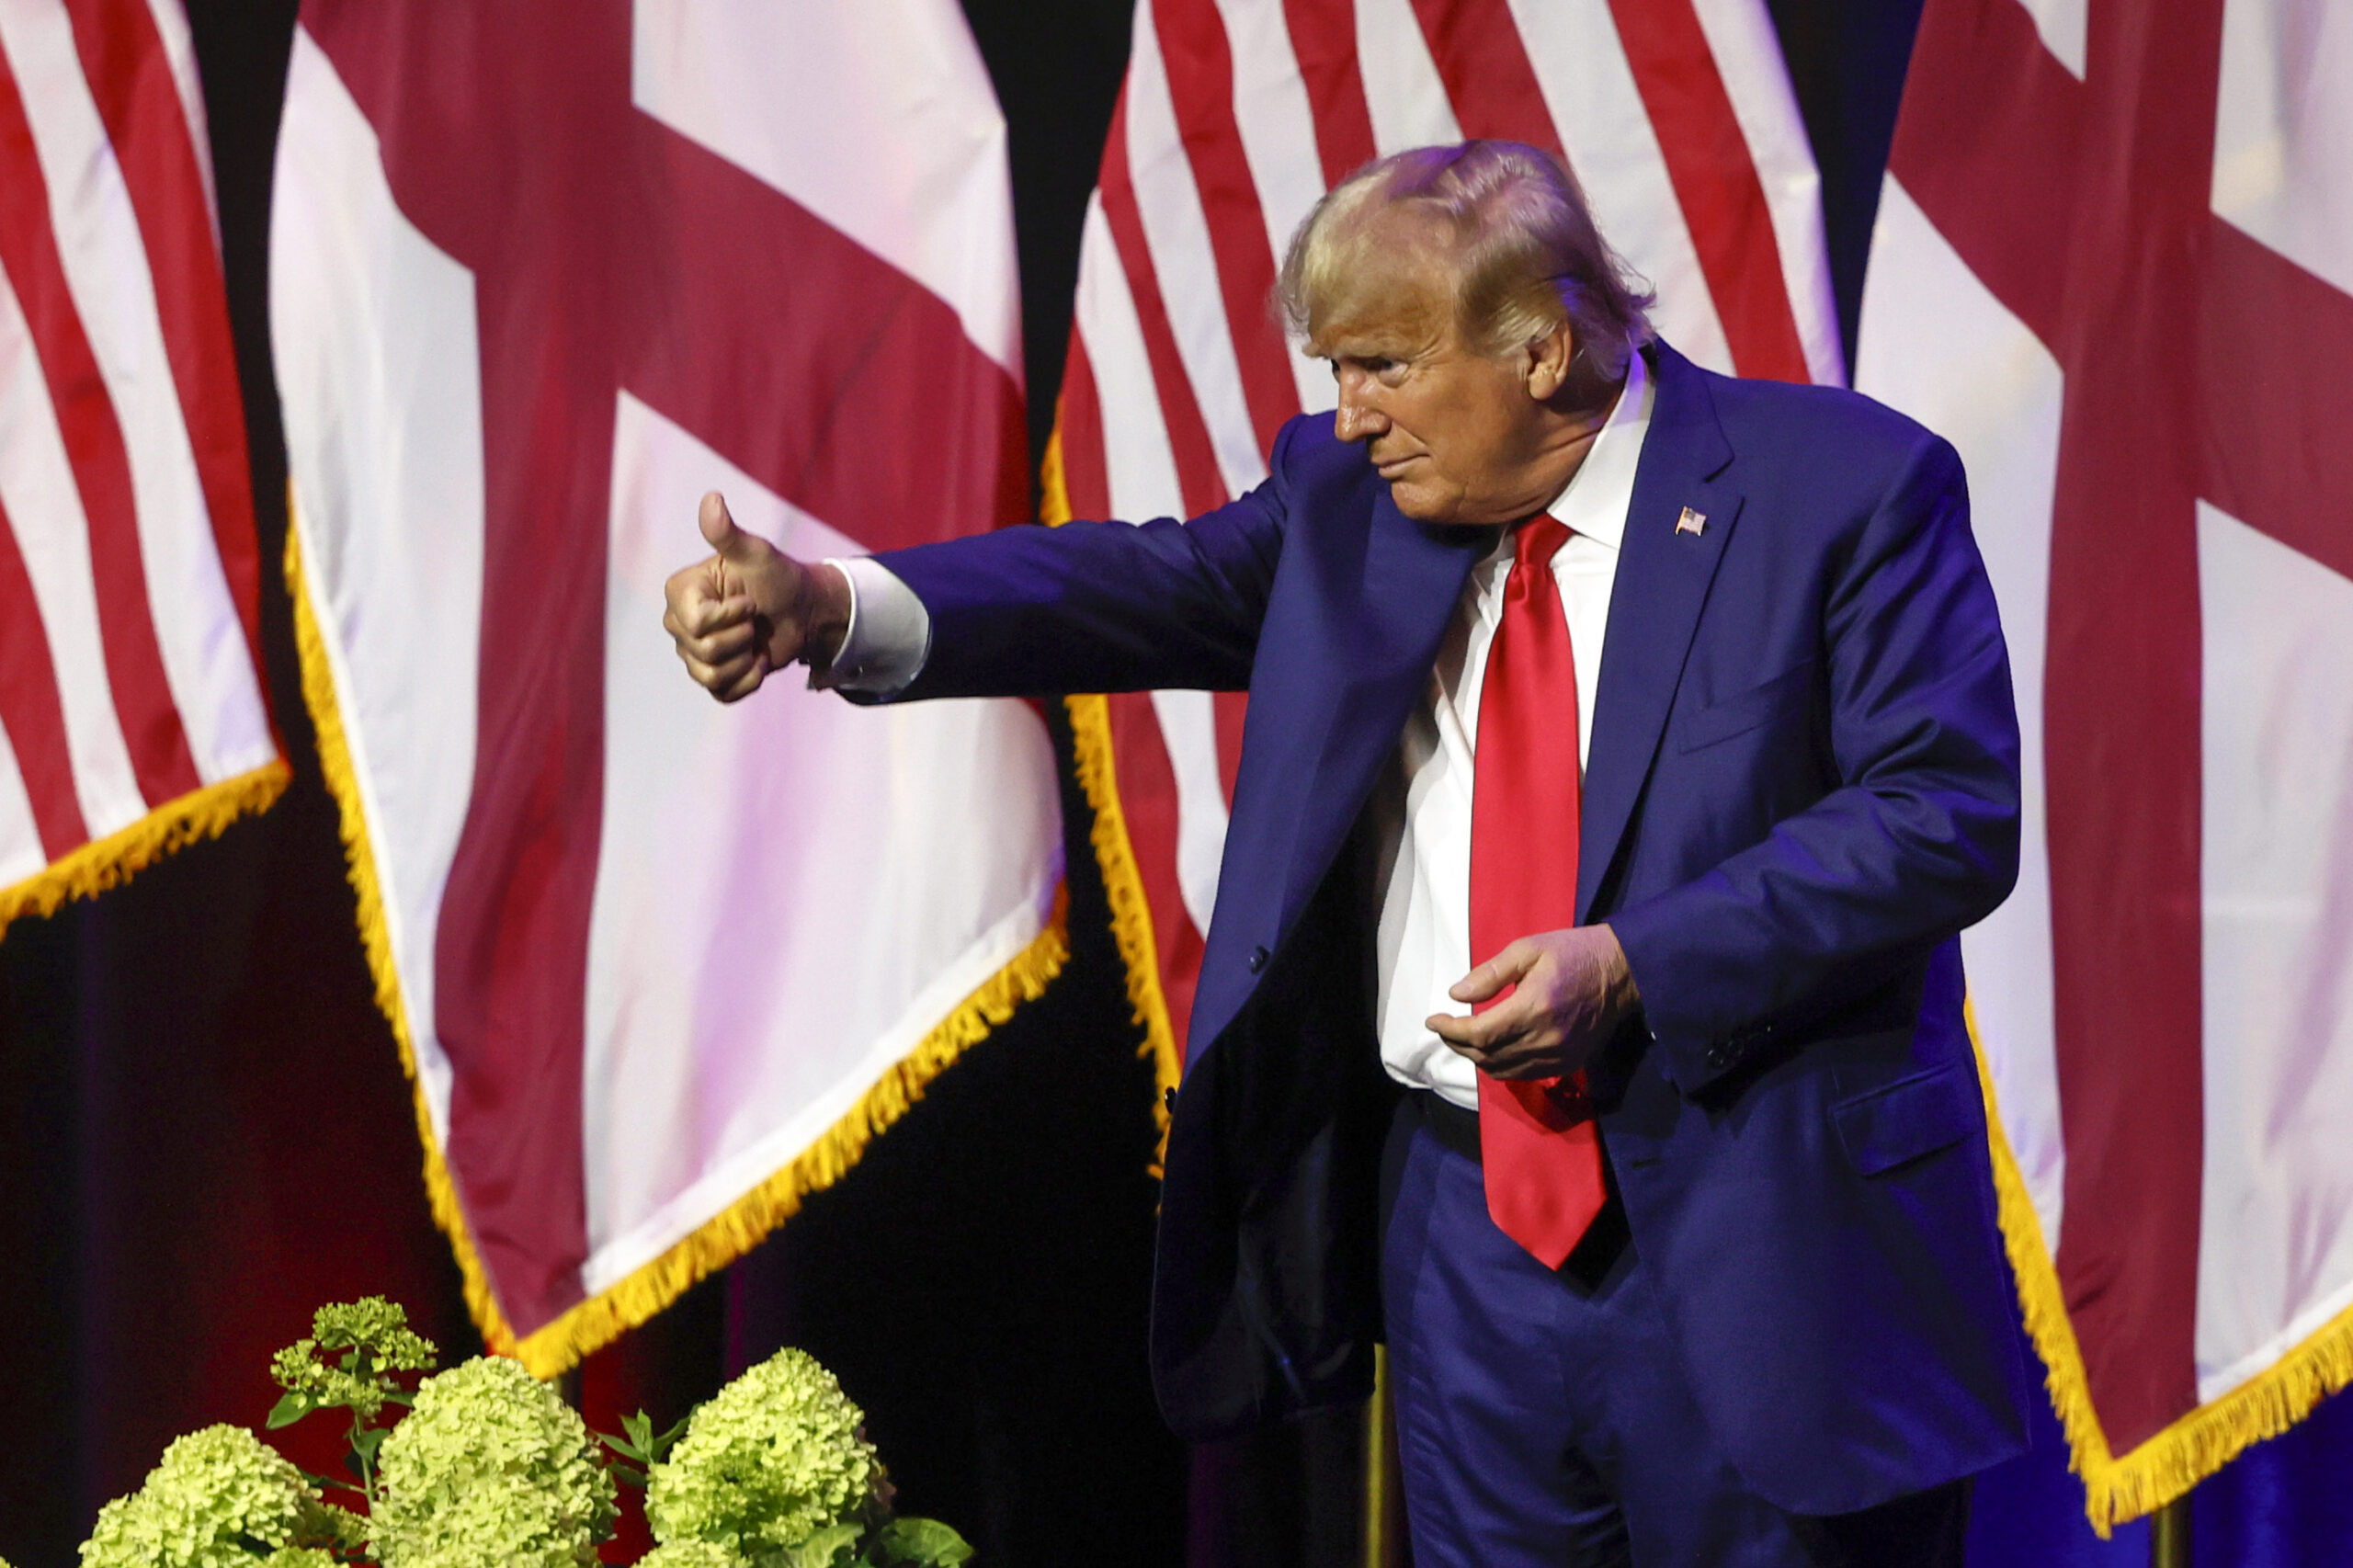 Former President Donald Trump gestures after speaking at a fundraiser event for the Alabama GOP, Fr...